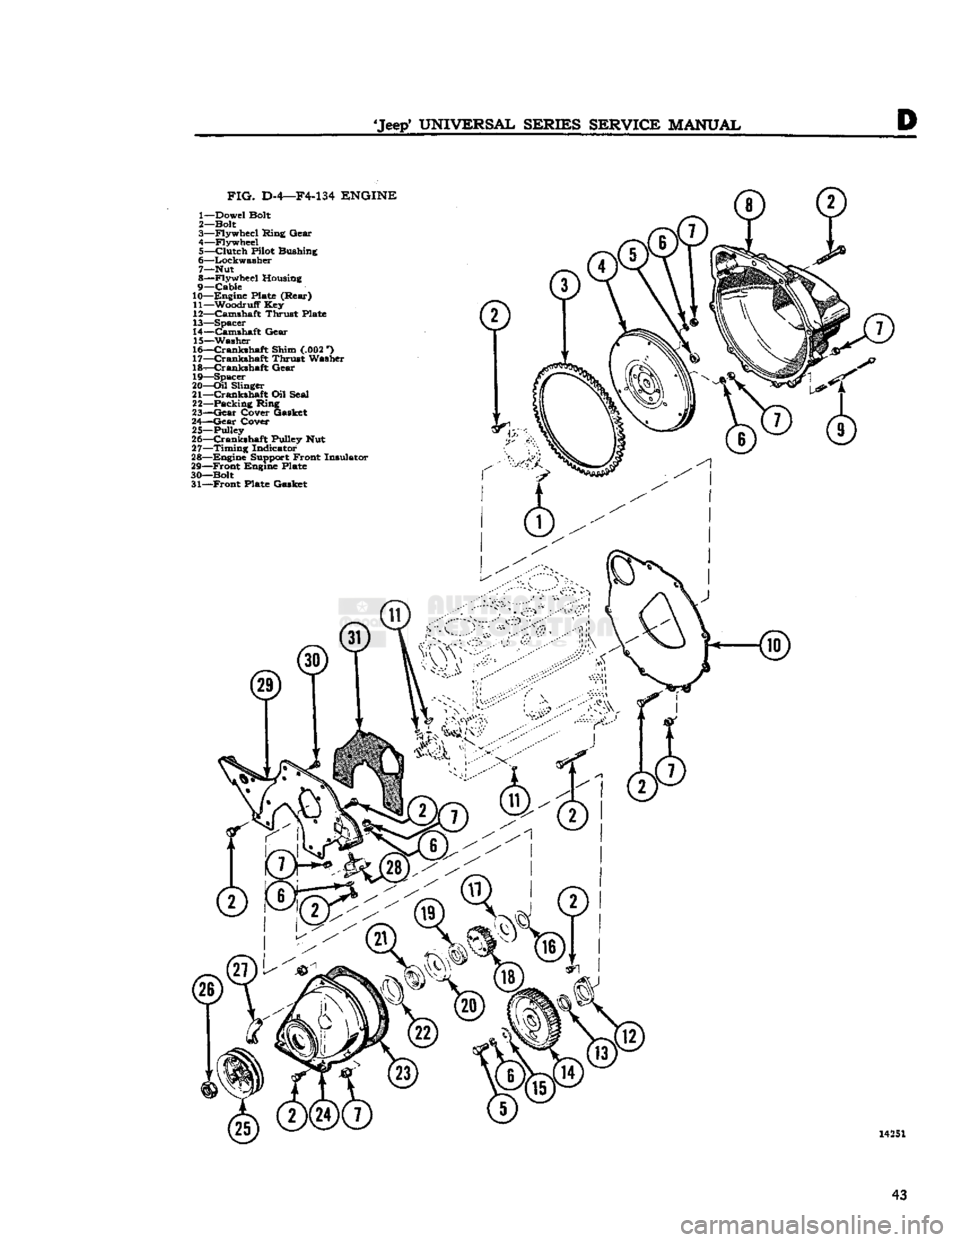 JEEP DJ 1953  Service Manual 
Jeep*
 UNIVERSAL SERIES SERVICE
 MANUAL 

FIG.
 D-4—F4-134
 ENGINE 

1— Dowel Bolt 
2— Bolt 
3— Flywheel Ring Gear 
4— Flywheel  5—
 Clutch
 Pilot Bushing 
6— Lockwasher 
7— Nut 
8�